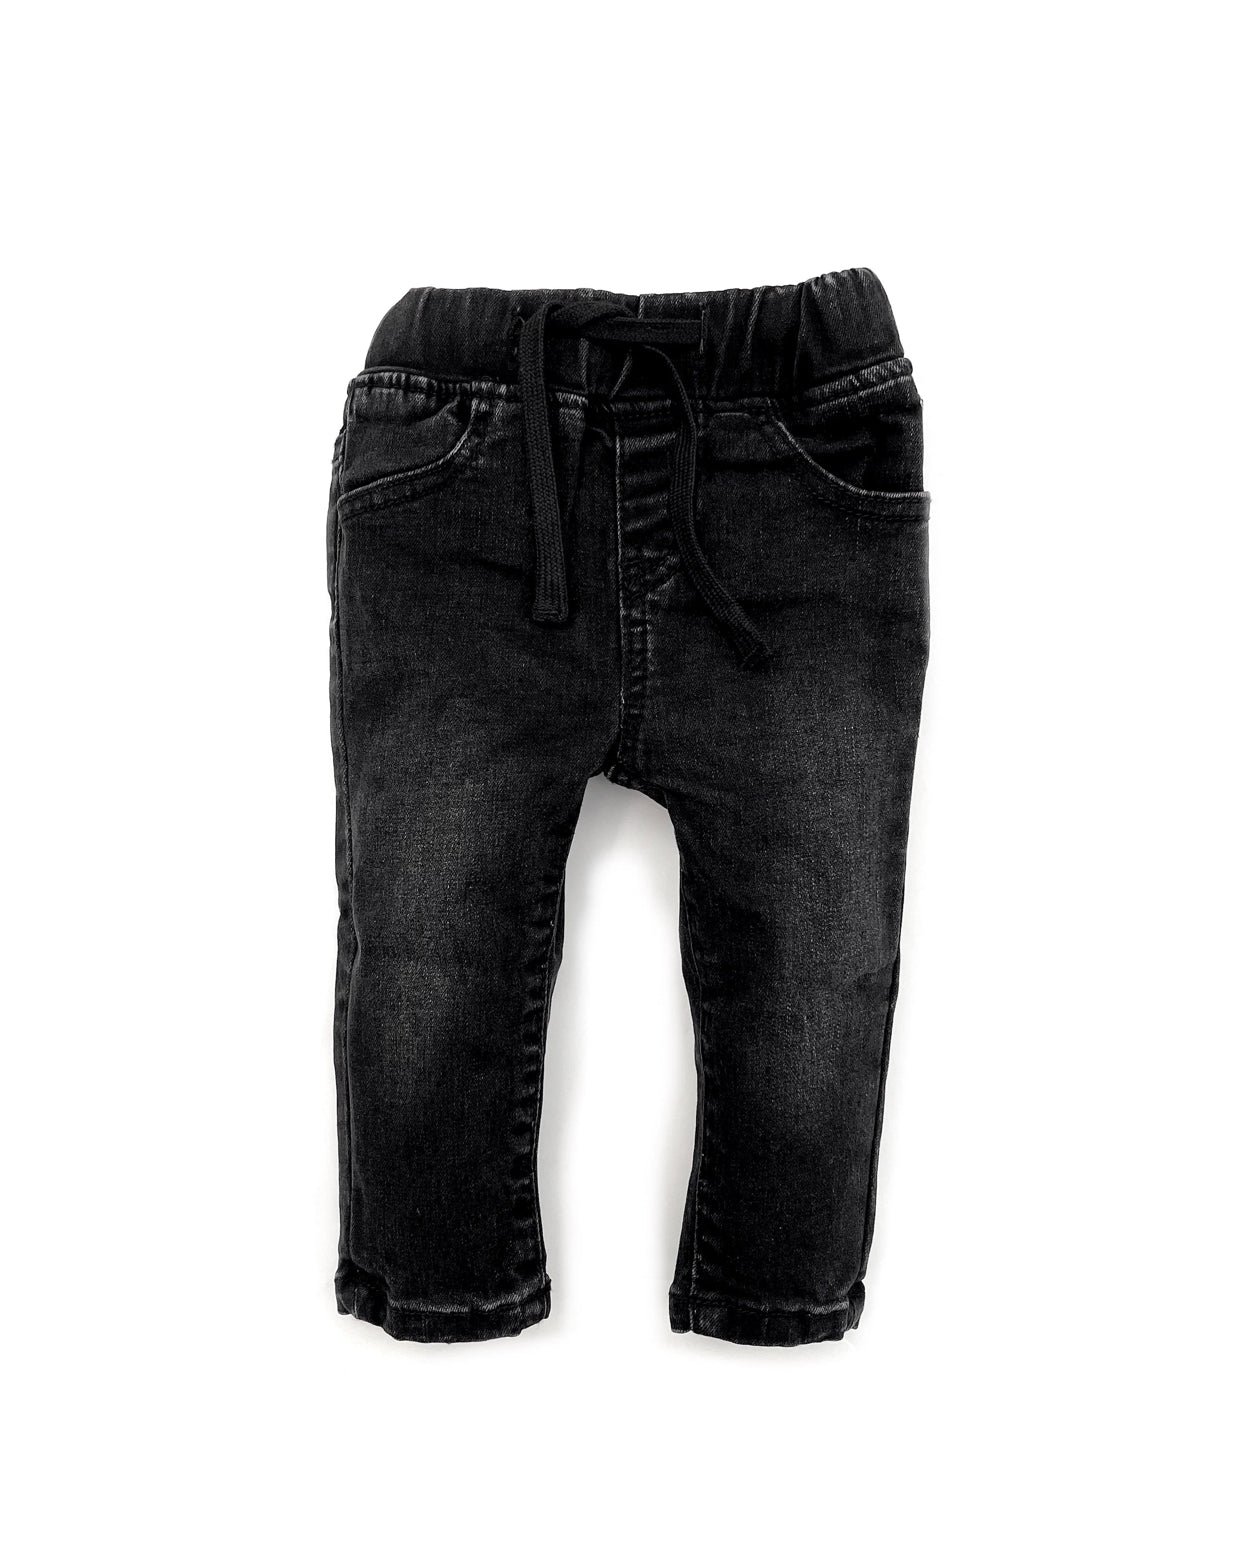 Denim - Black Wash Jeans